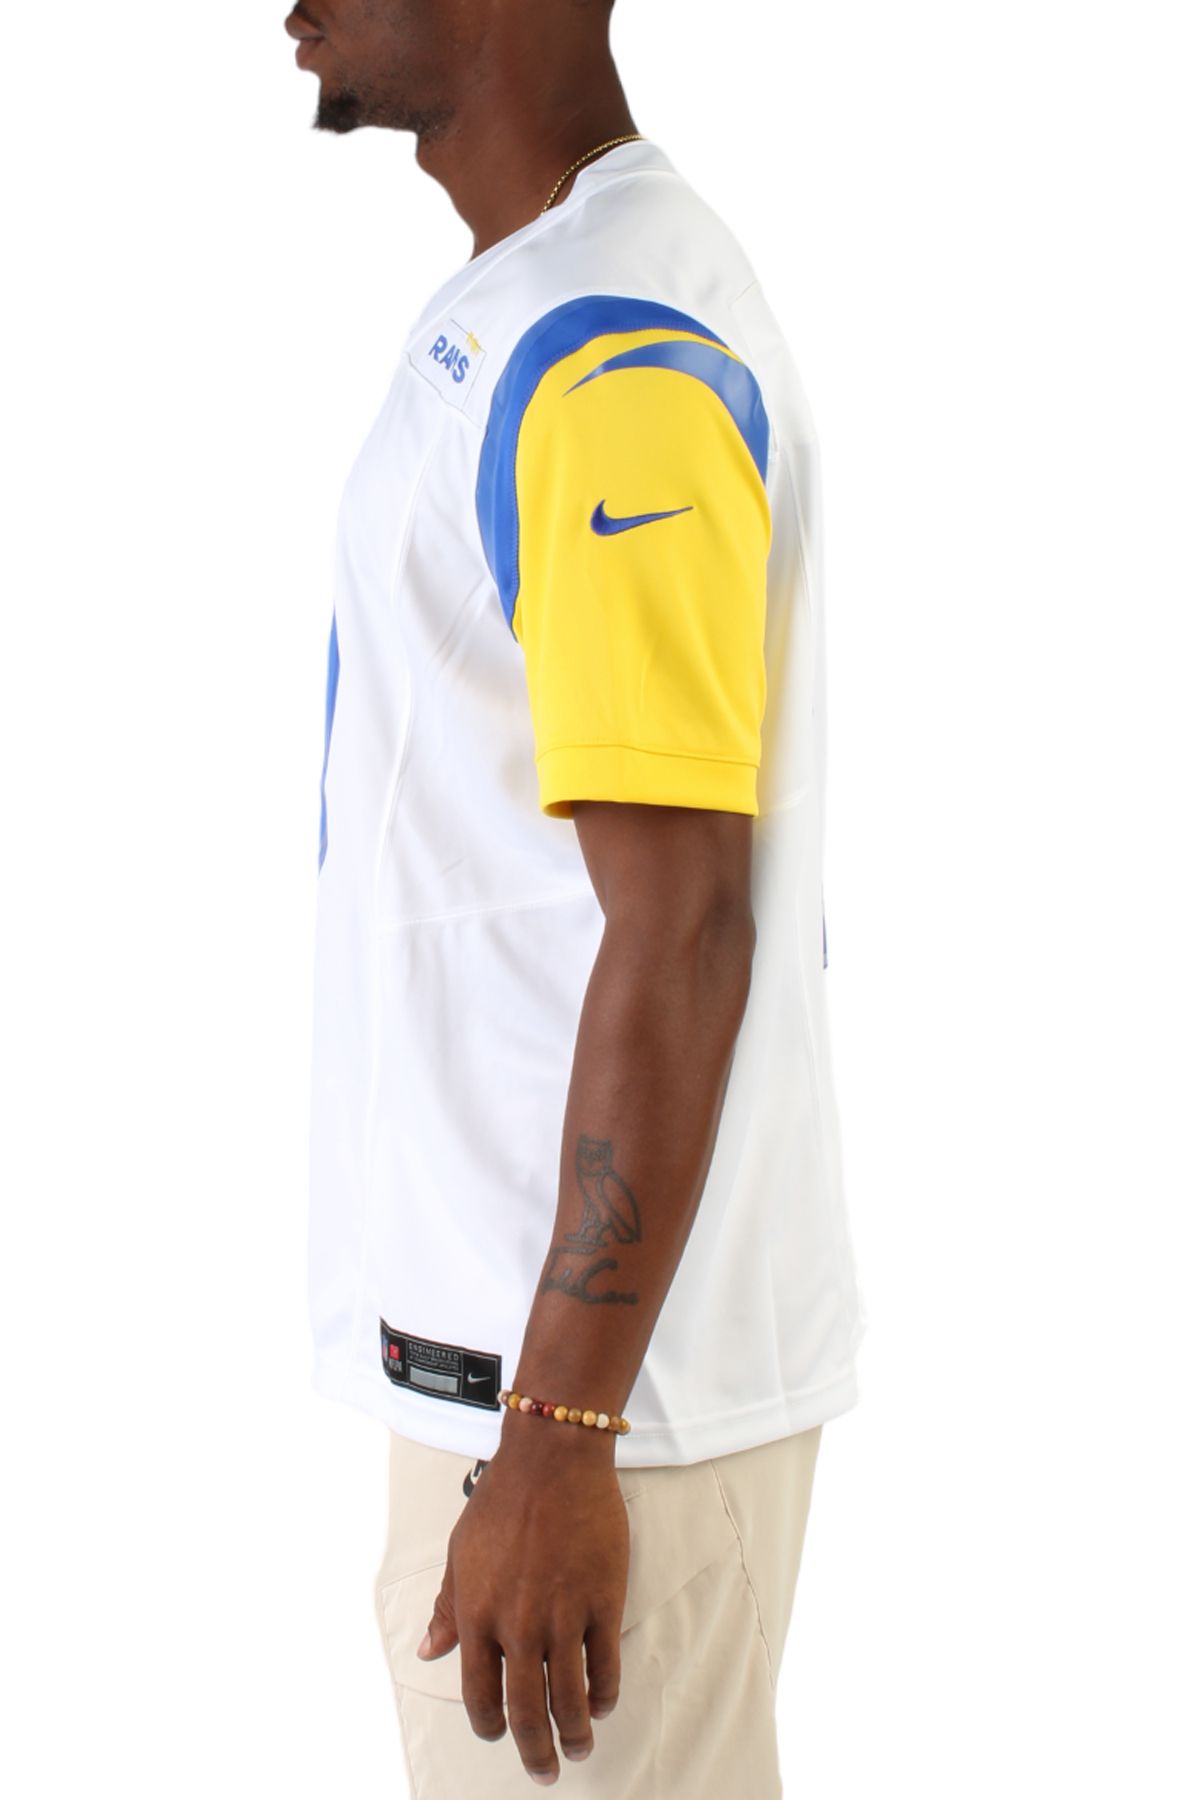 Matthew Stafford Los Angeles Rams Men's Nike Dri-Fit NFL Limited Football Jersey - White, XXL